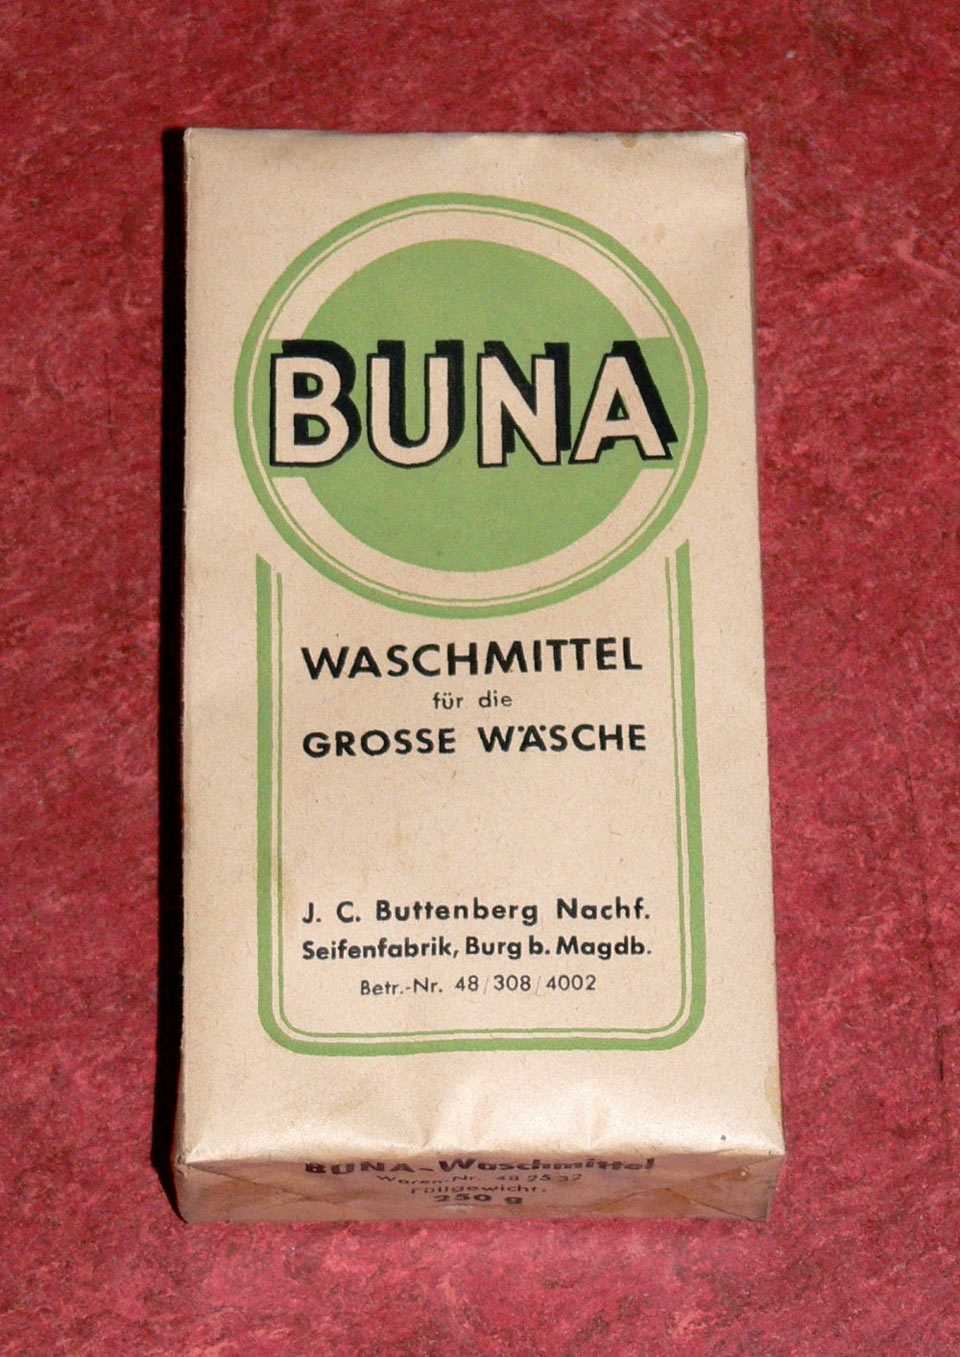 Waschmittel BUNA (Museumsverband Sachsen-Anhalt CC BY-NC-SA)